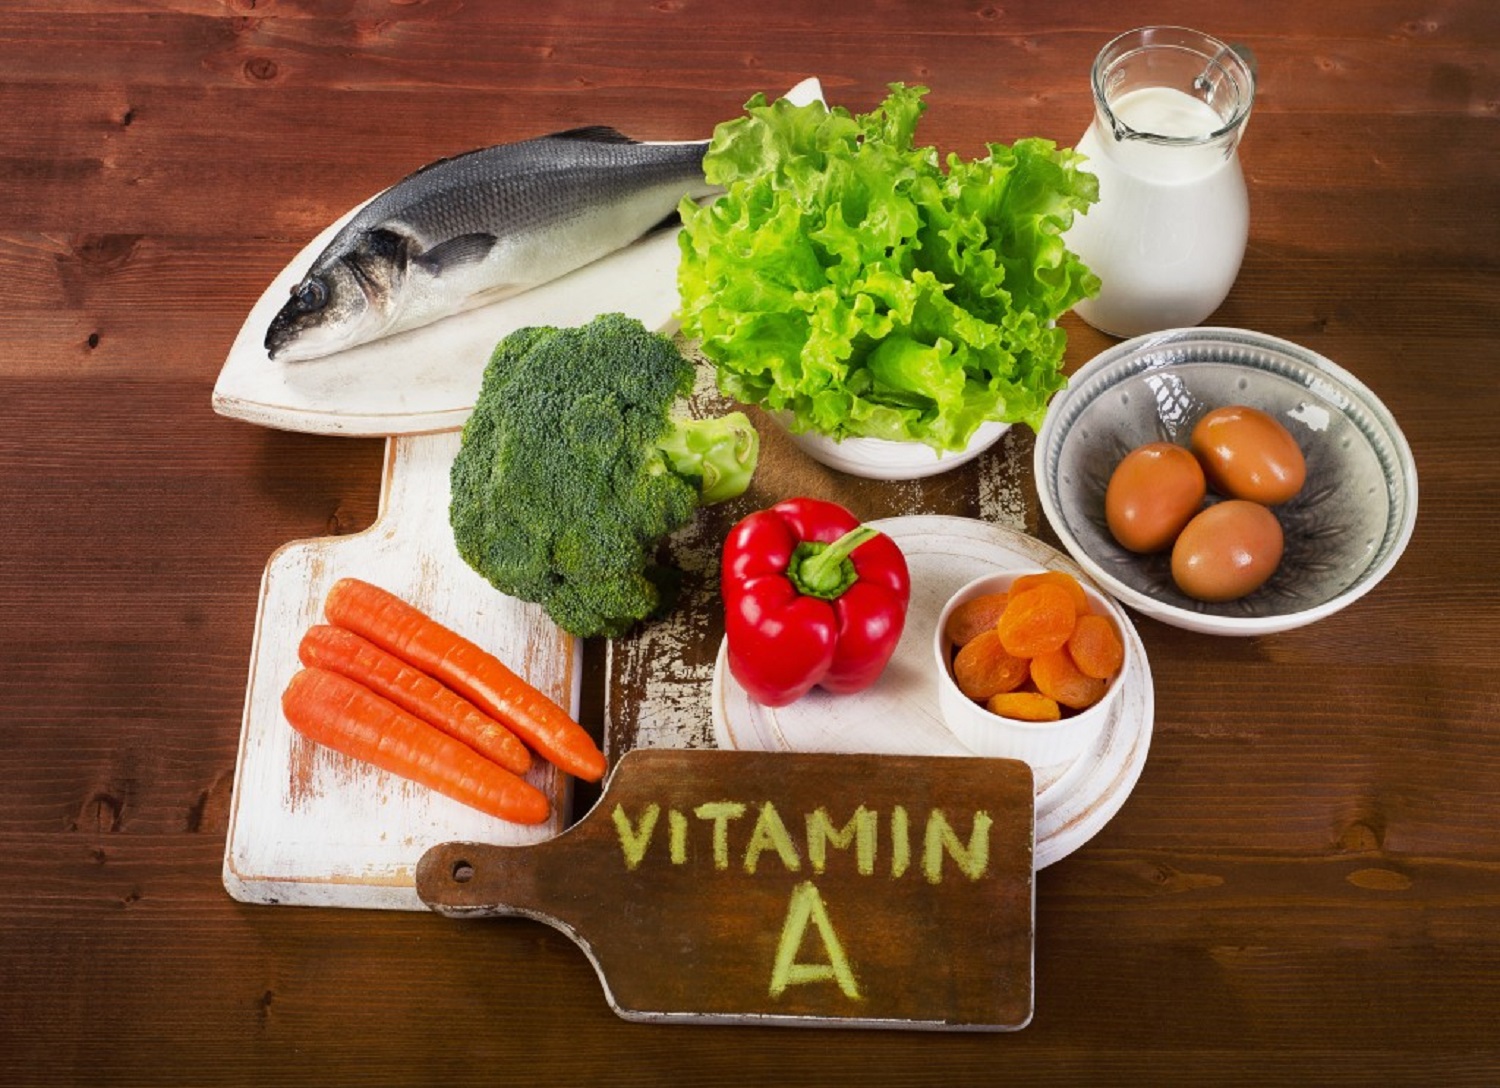 Vit vitamins. Что такое витамины. Витамины в продуктах. Витамины в еде. Витам.